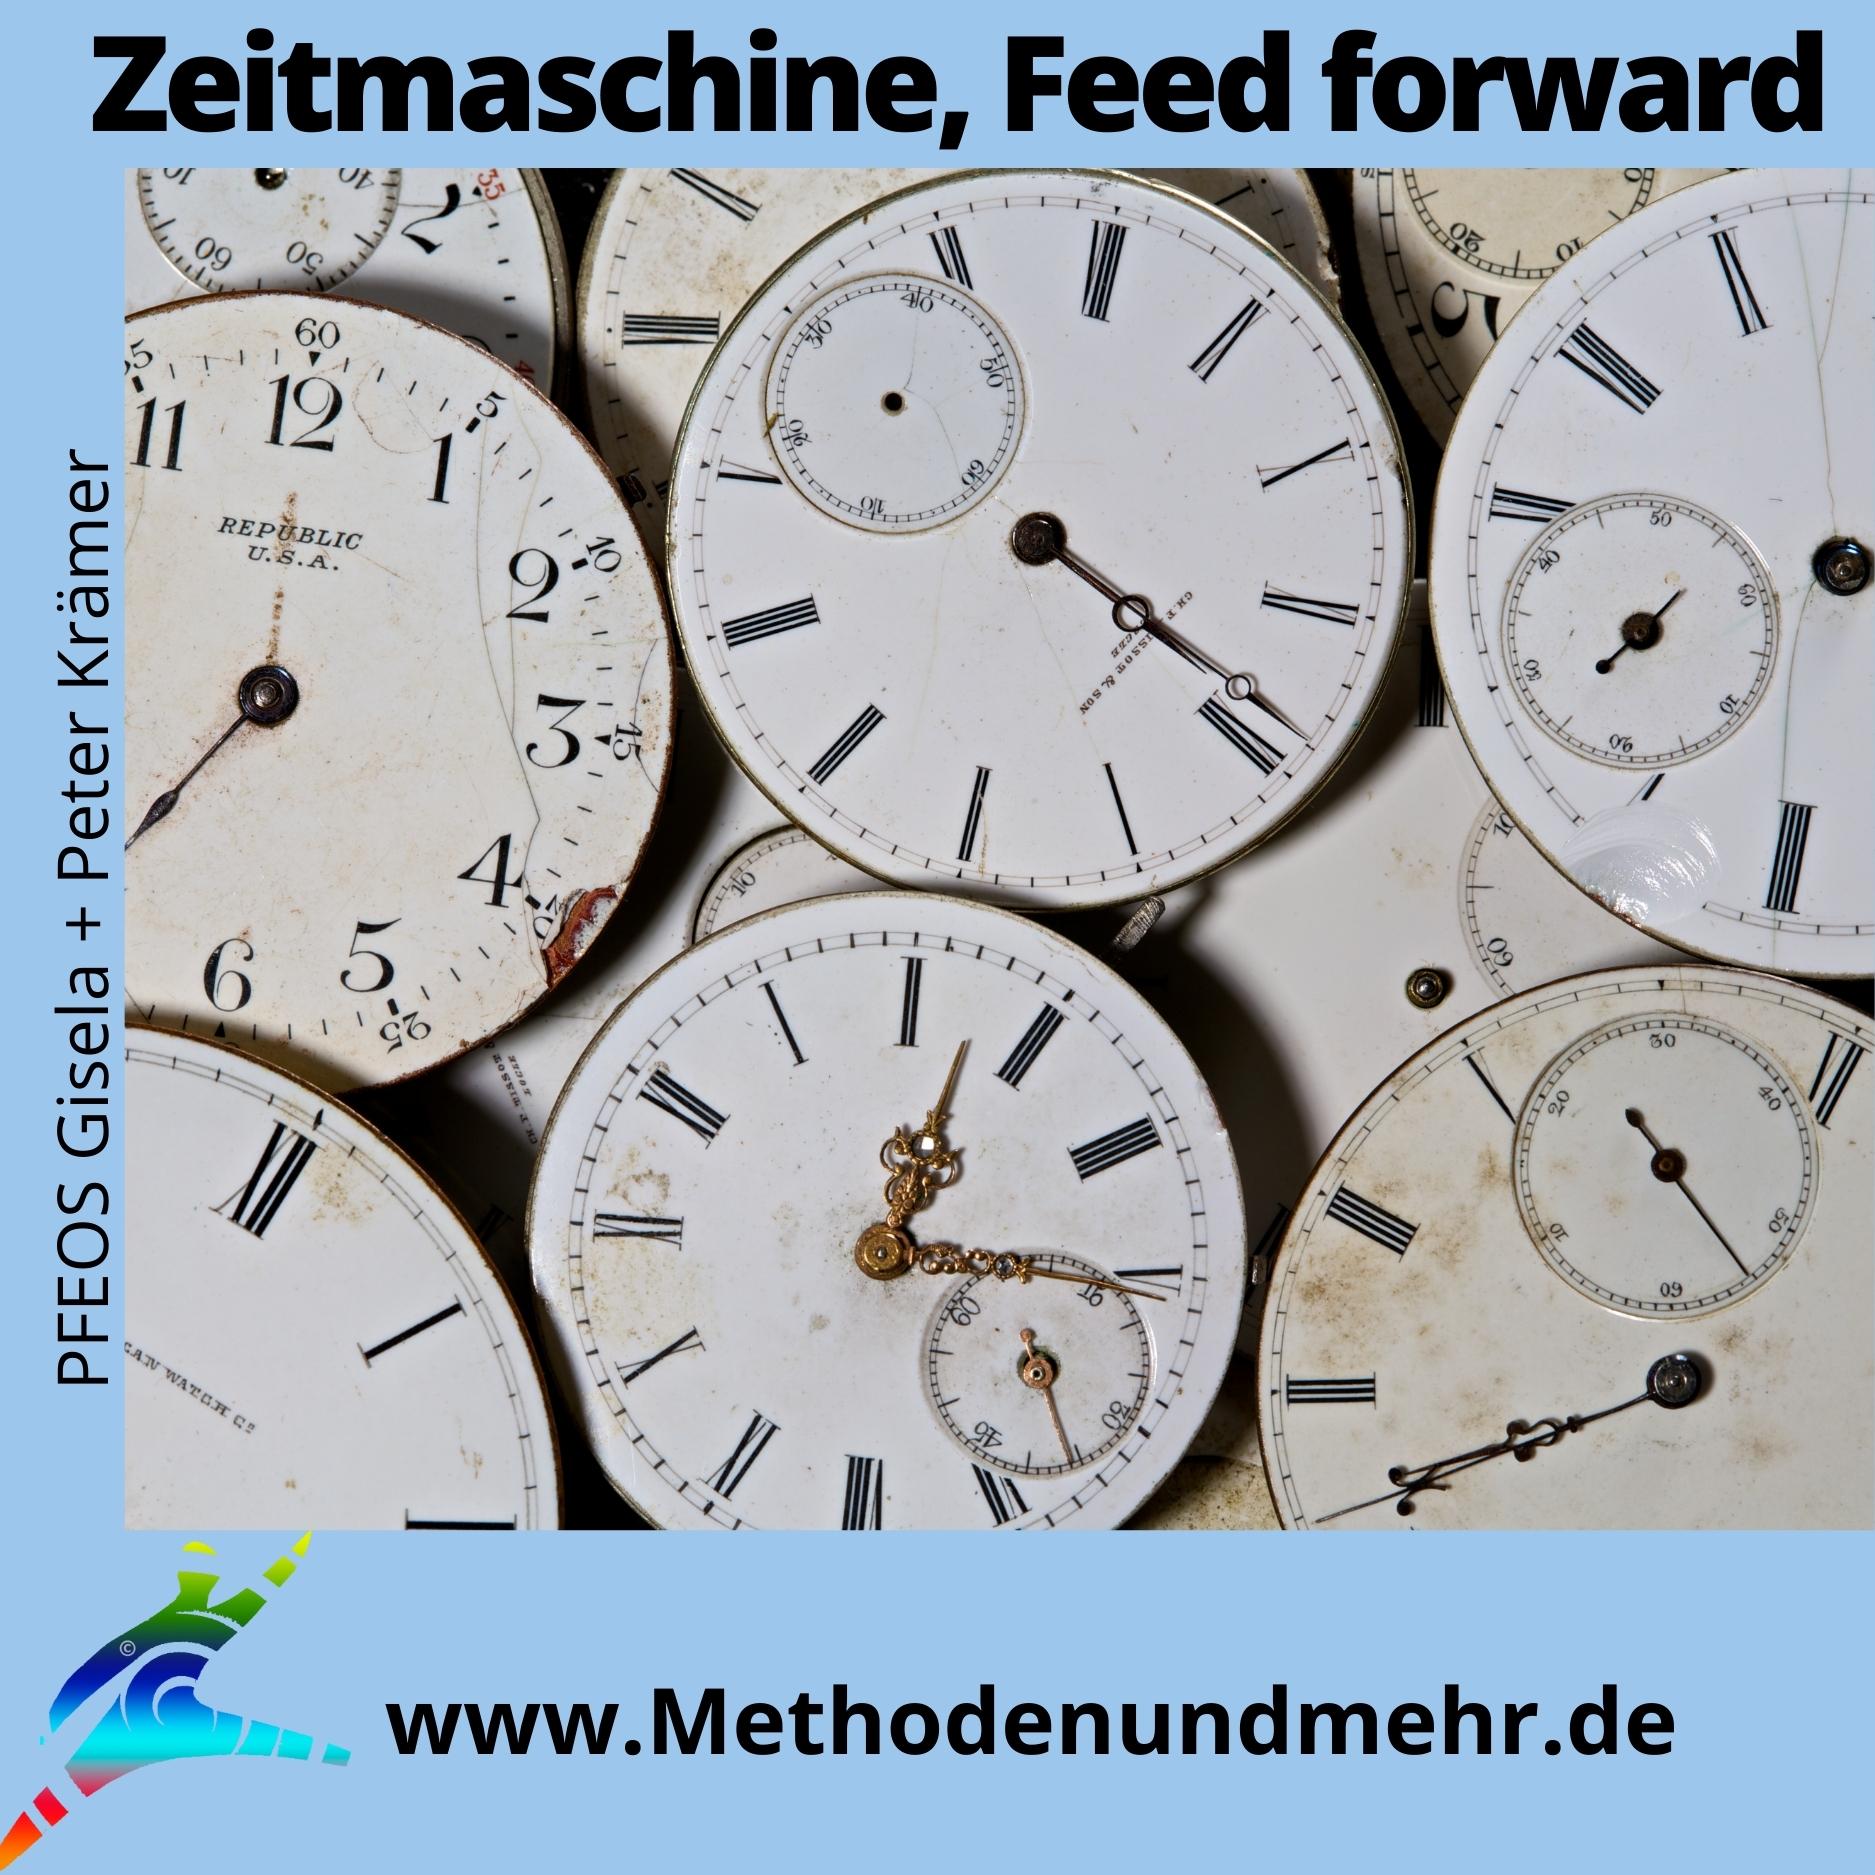 Zeitmaschine, Feed forward